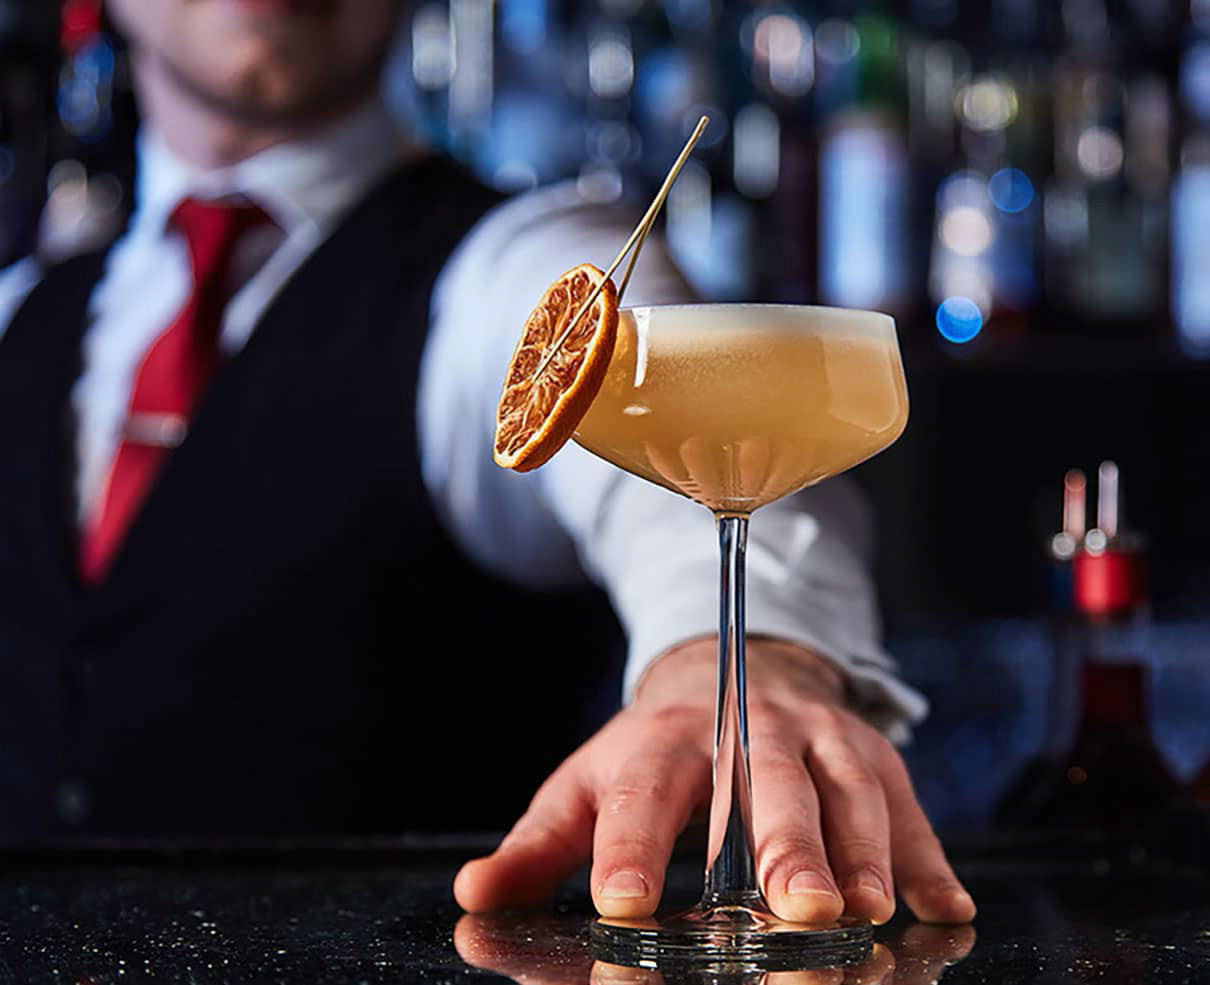 Elegant cocktail served in chic London bar.